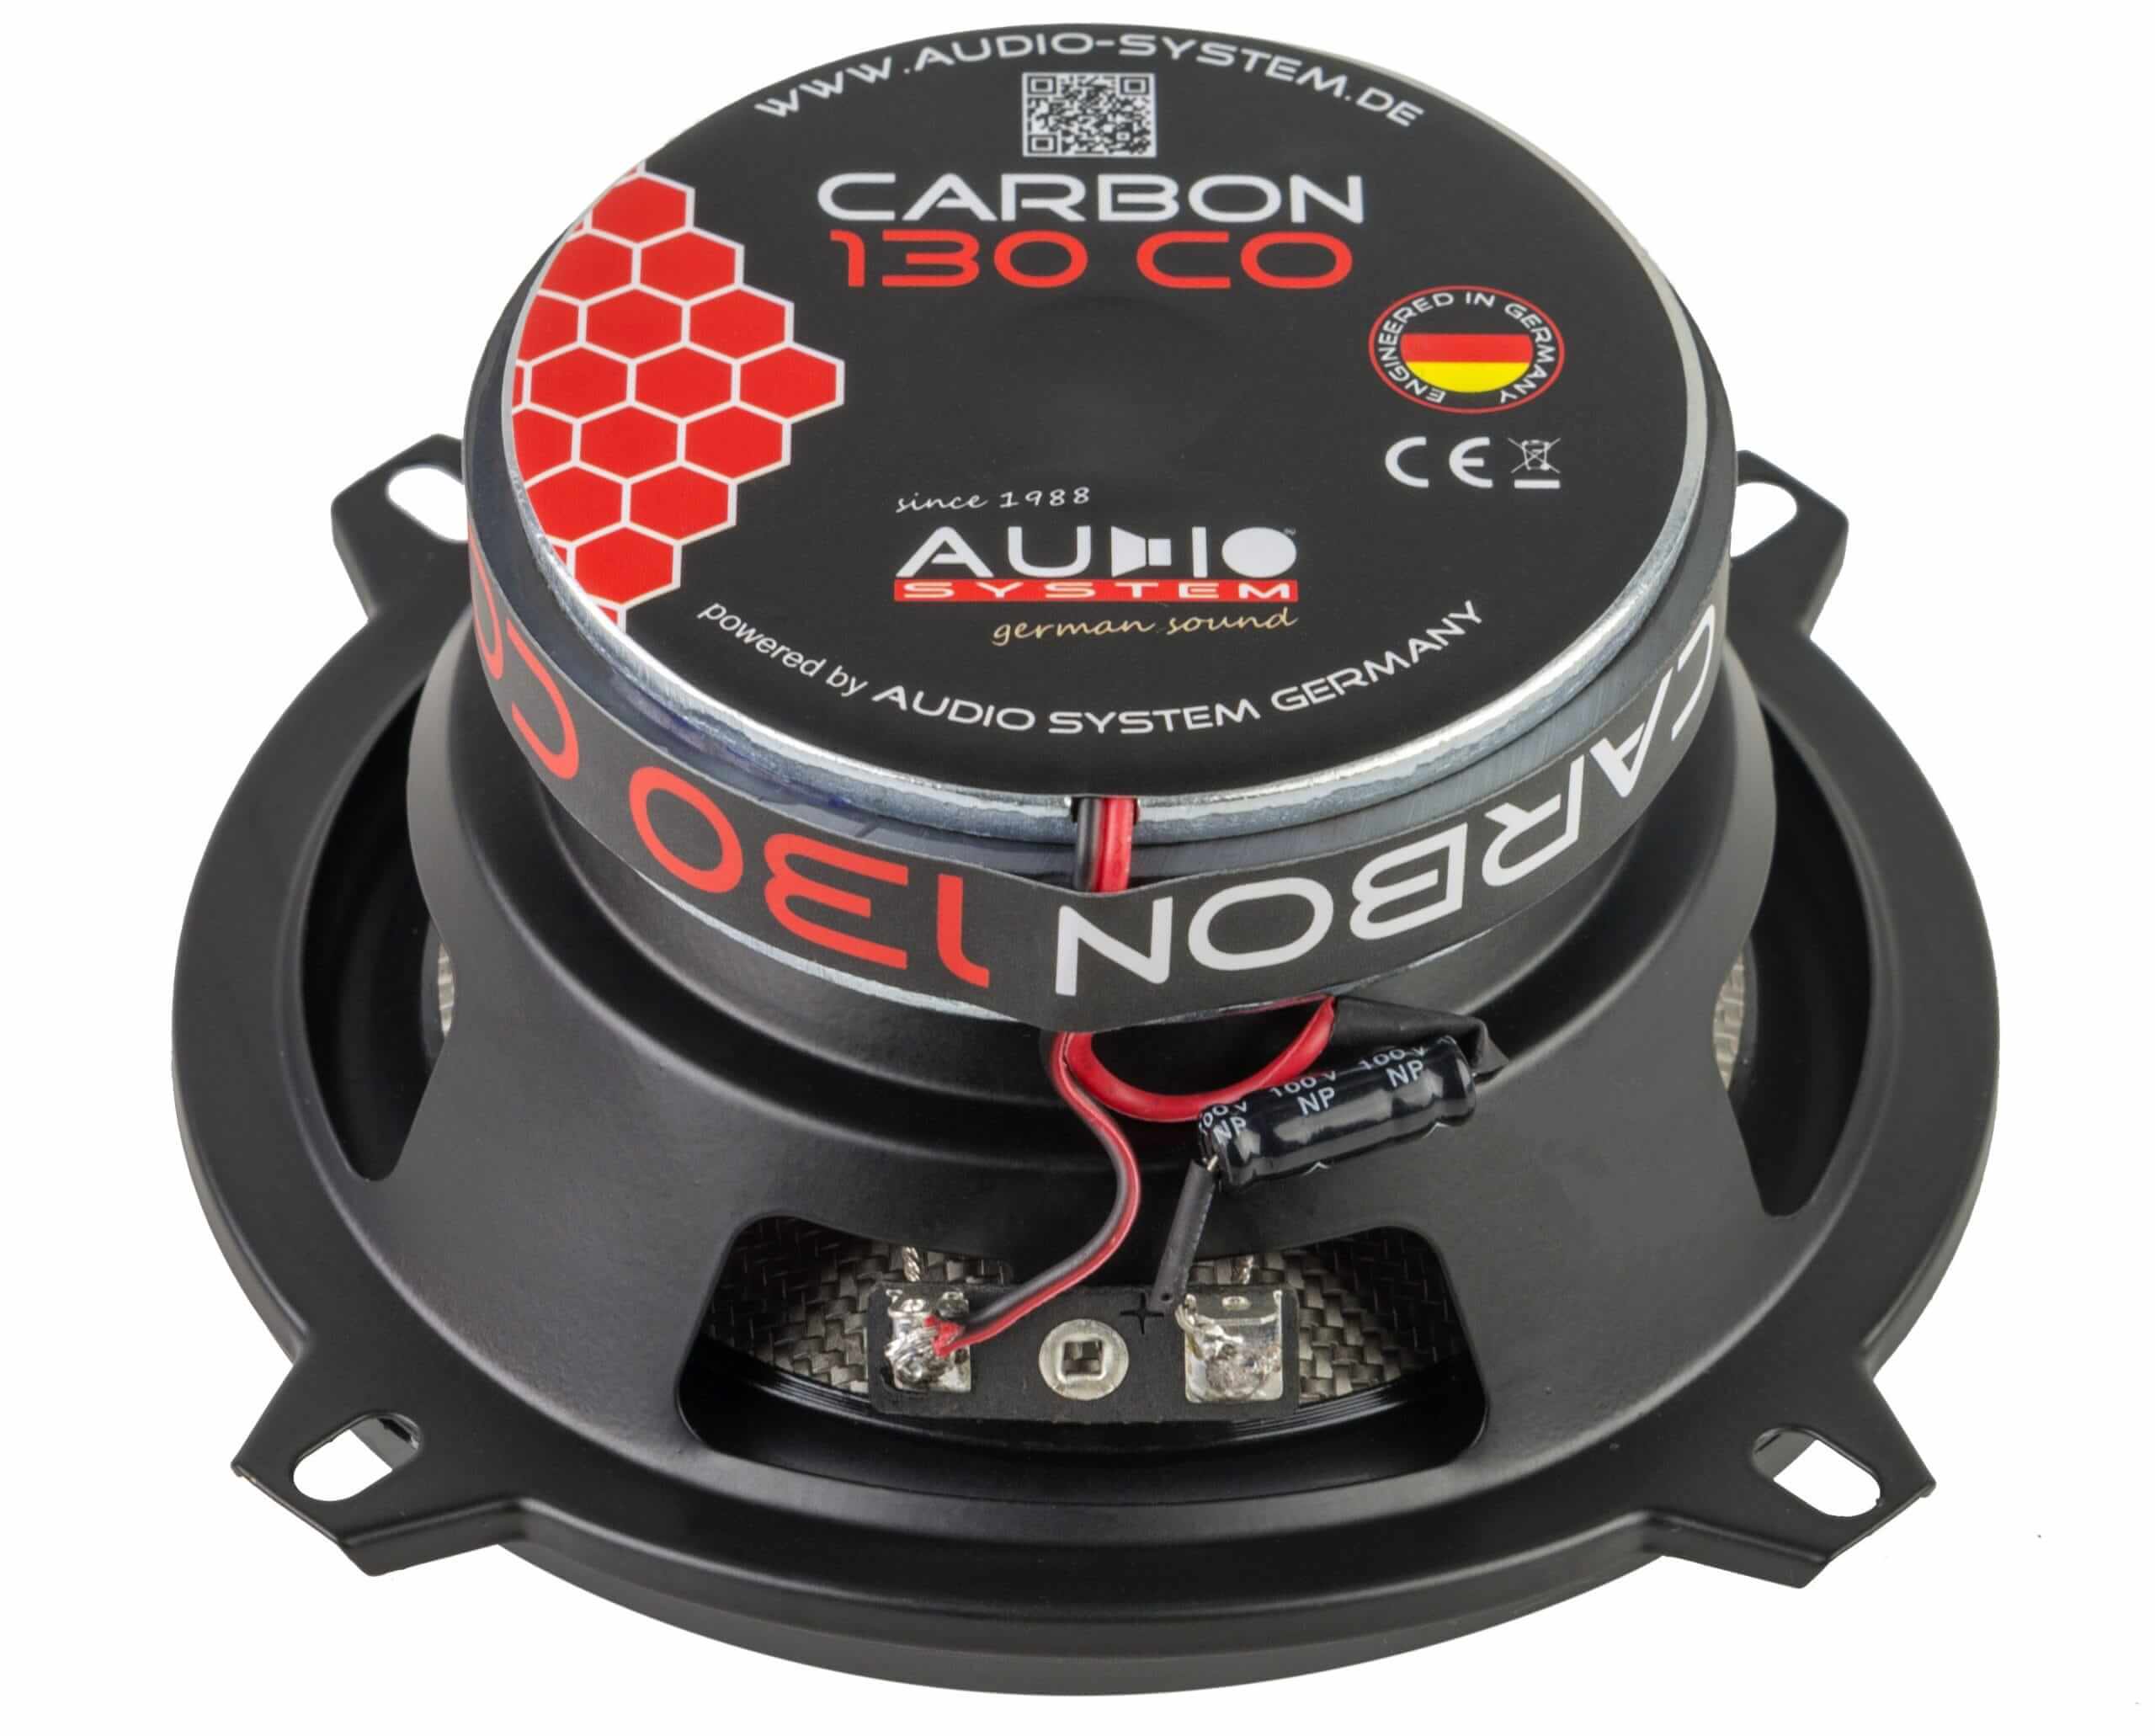 Audio System Carbon 130 CO